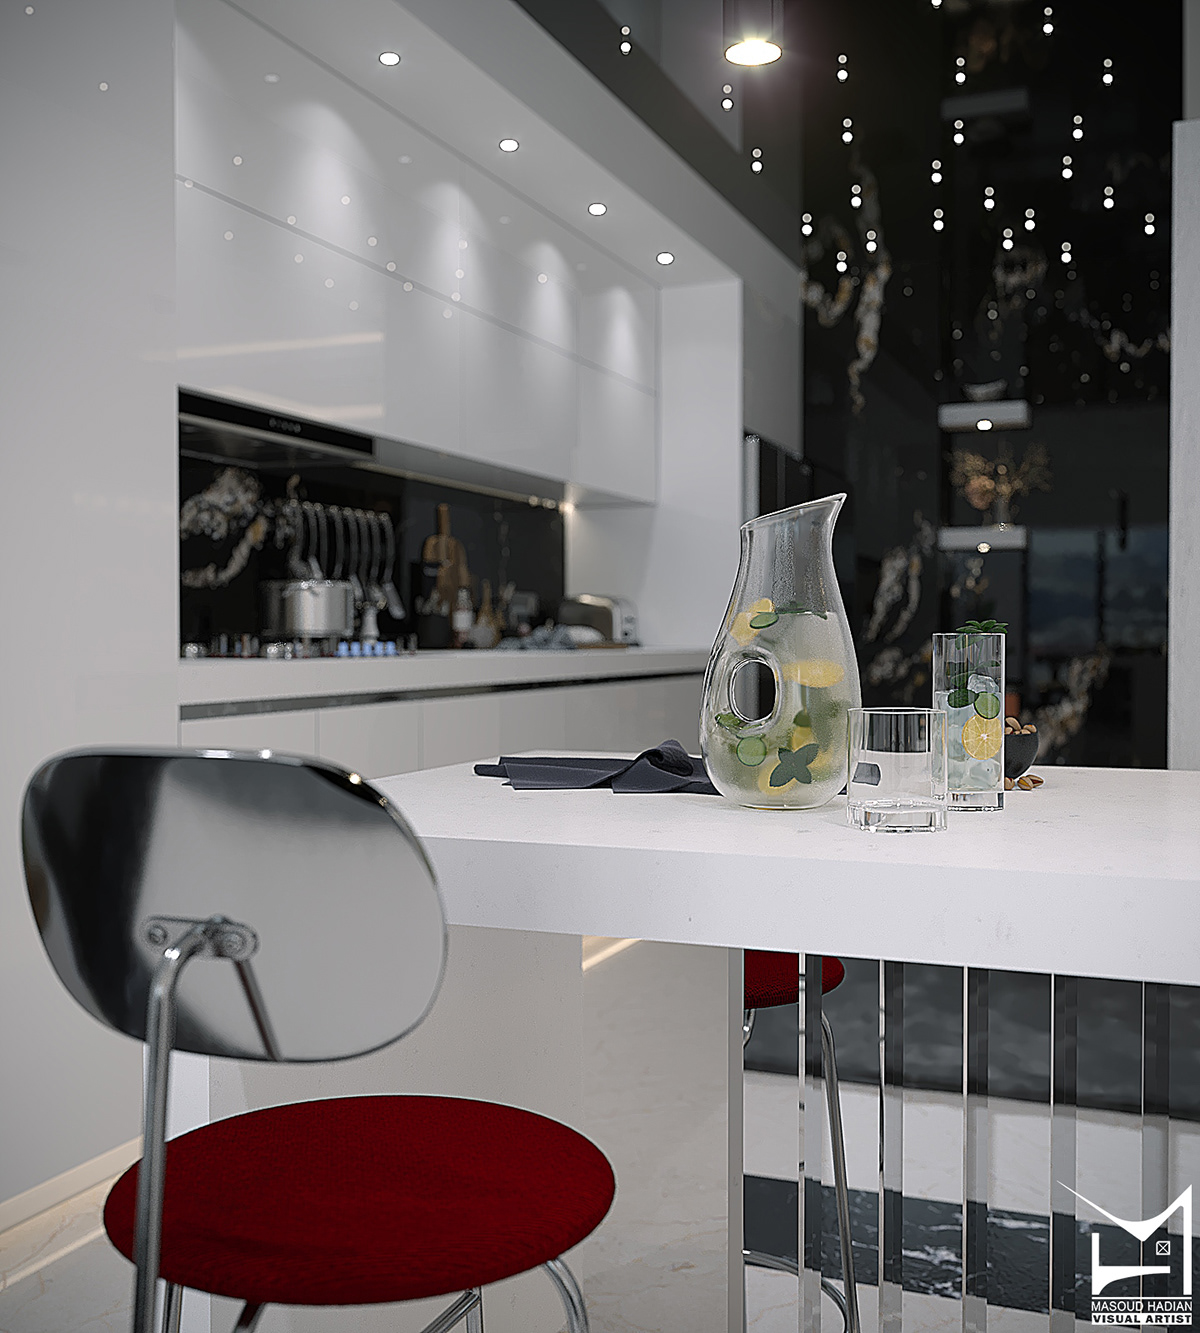 3ds max architecture corona render  kitchen design realrender visualization vray render